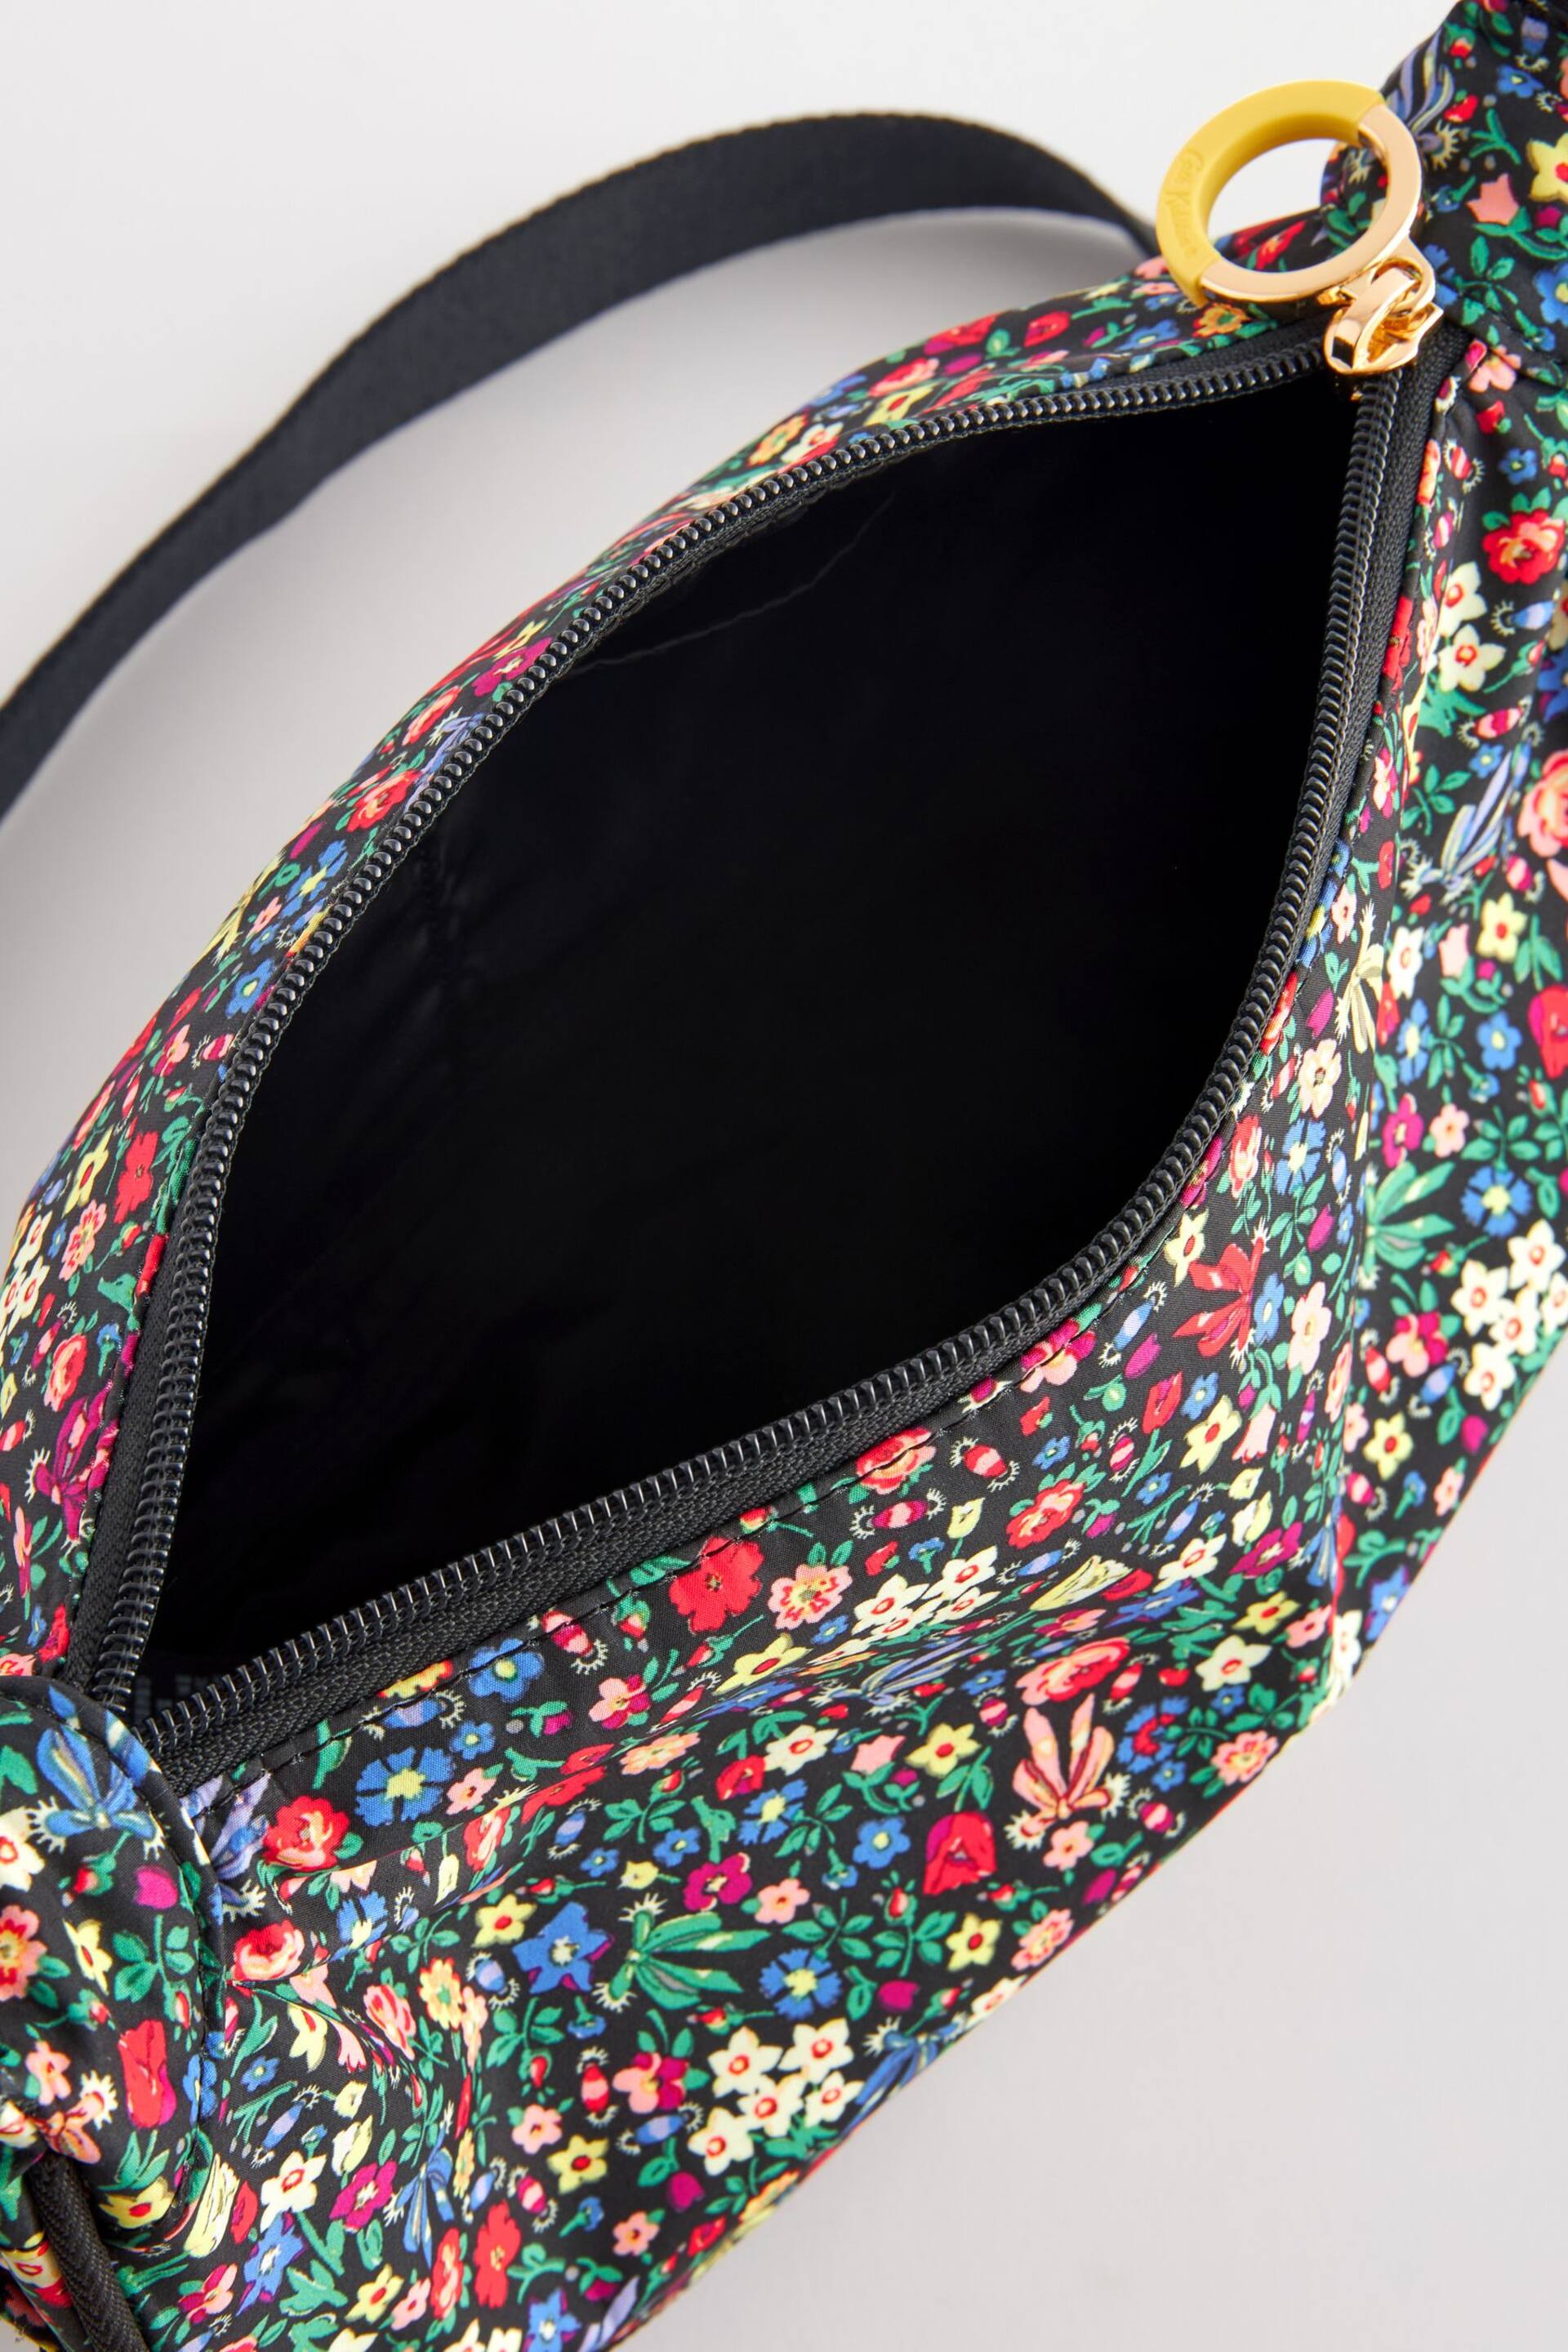 Cath Kidston Black Ditsy Floral Round Mini Shoulder Bag - Image 6 of 6